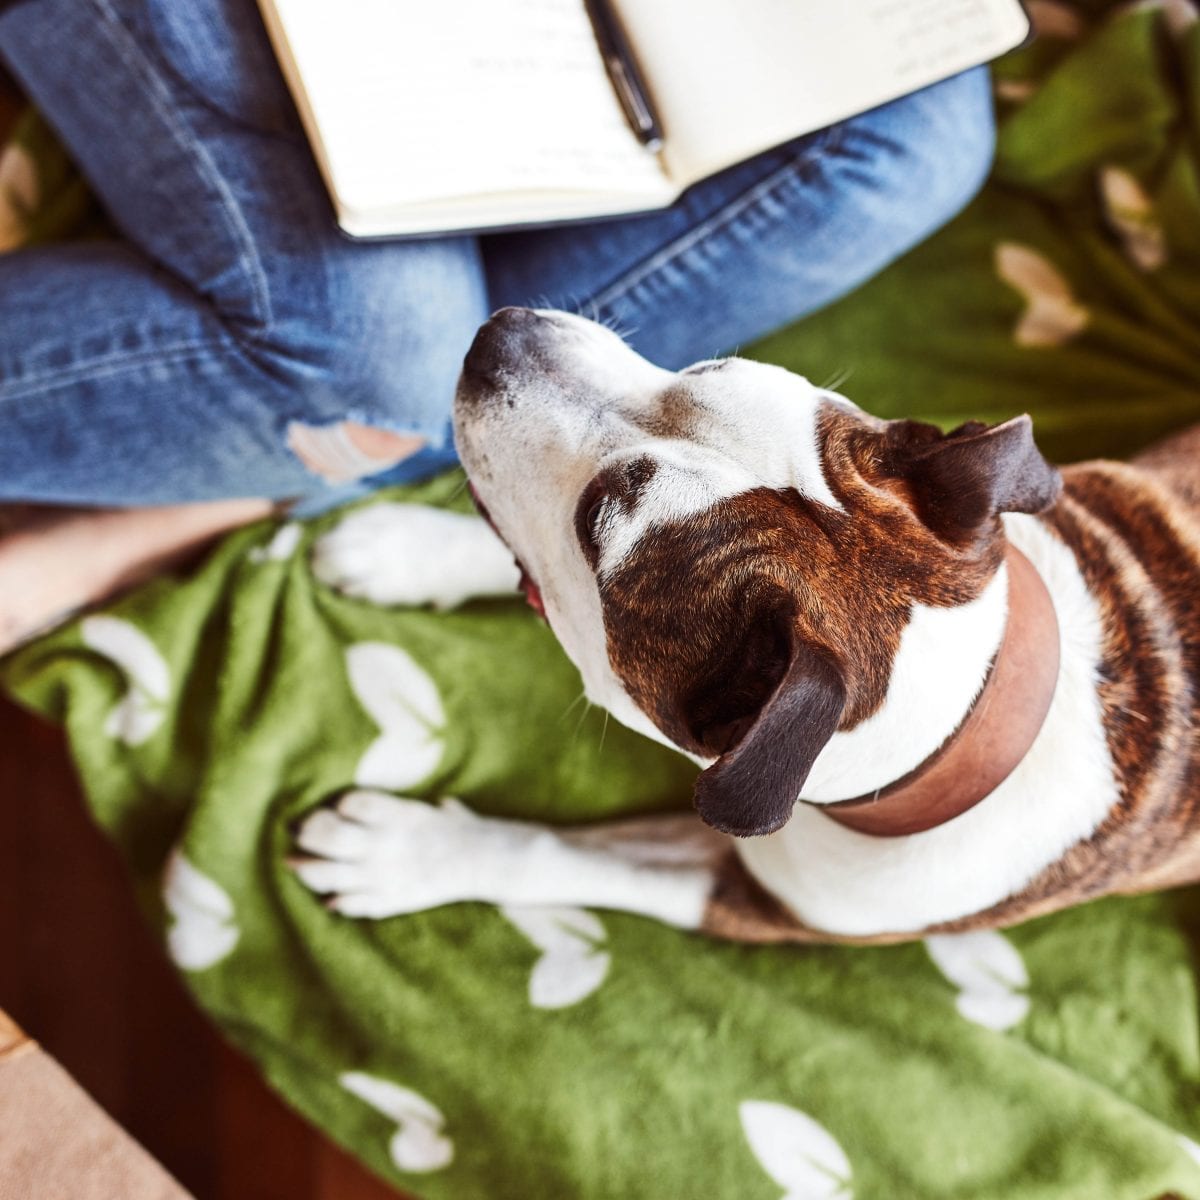 Reasons to choose a dog from a shelter: Carolina’s adoption story